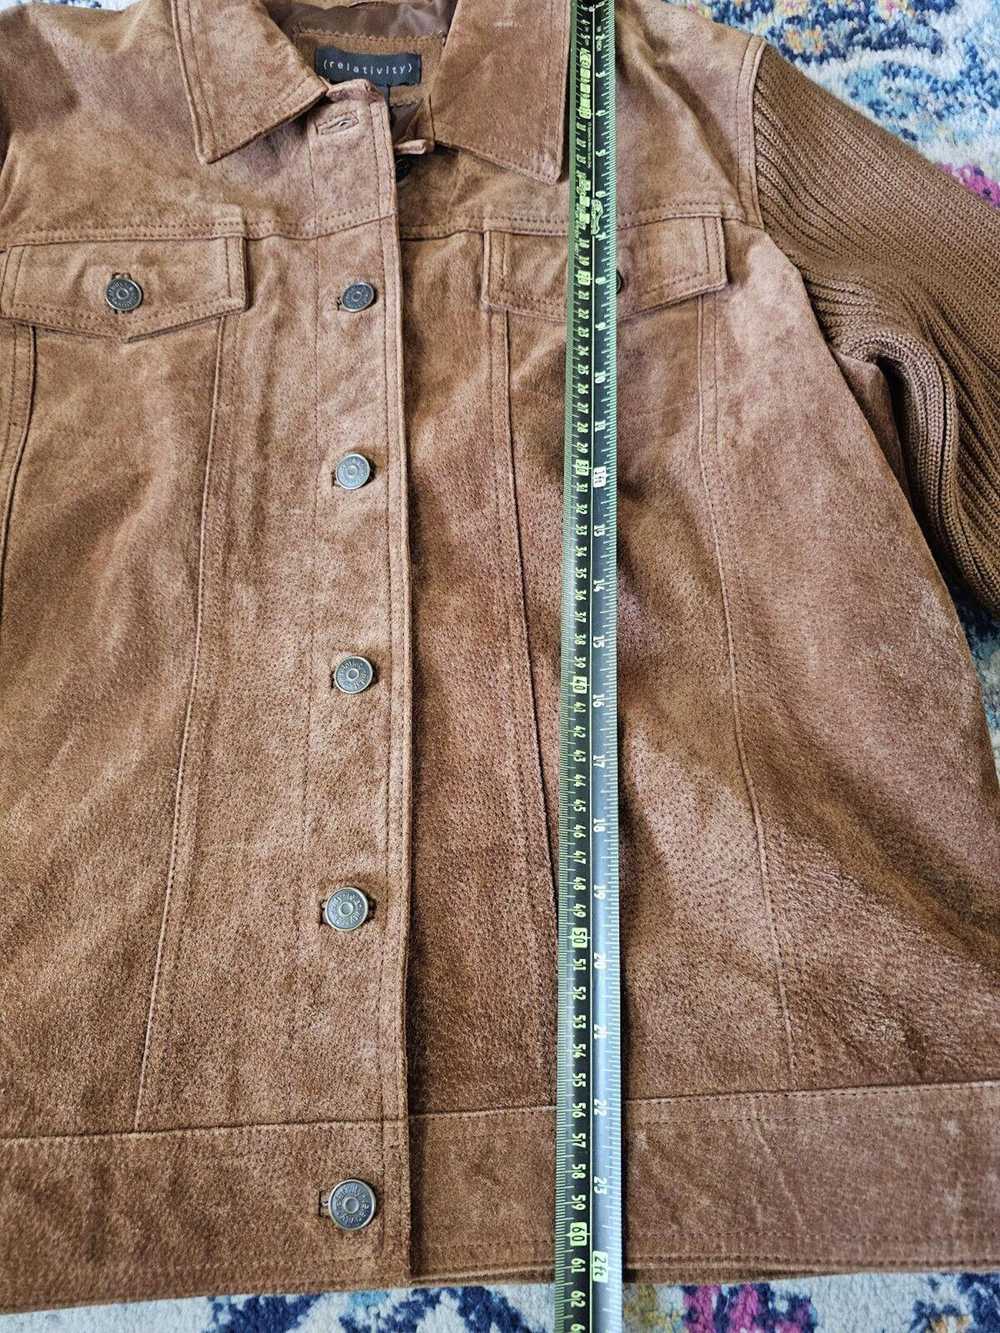 Designer Relativity 100% Genuine Leather Jacket L… - image 8